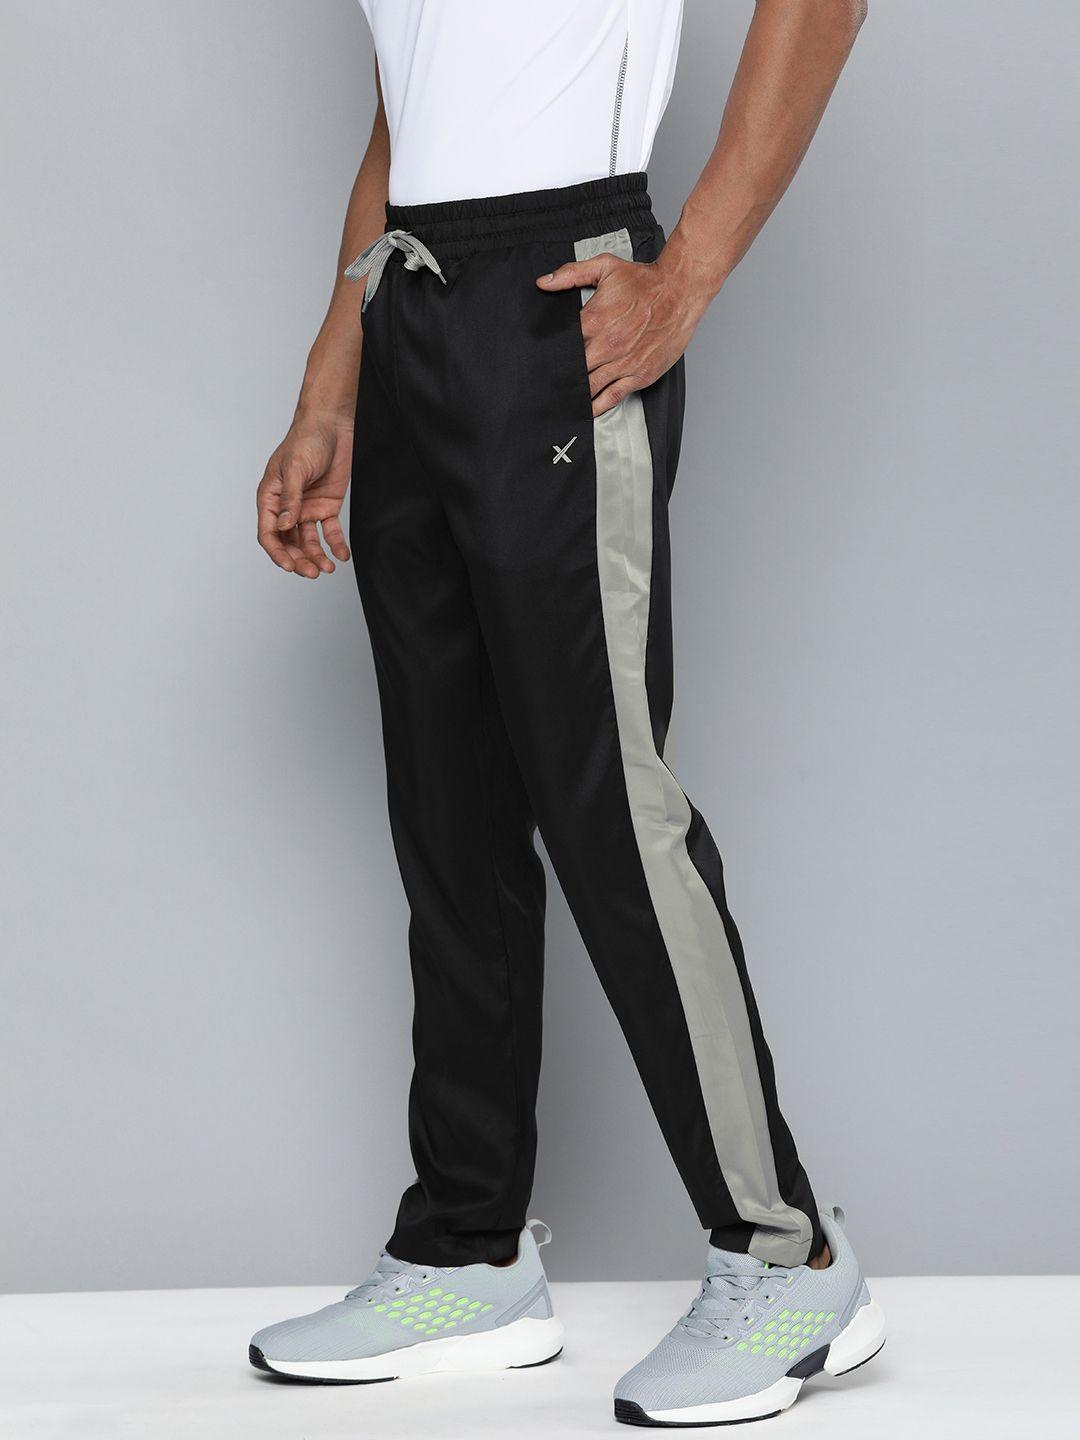 hrx by hrithik roshan men black & grey solid rapid dry panel detail track pants